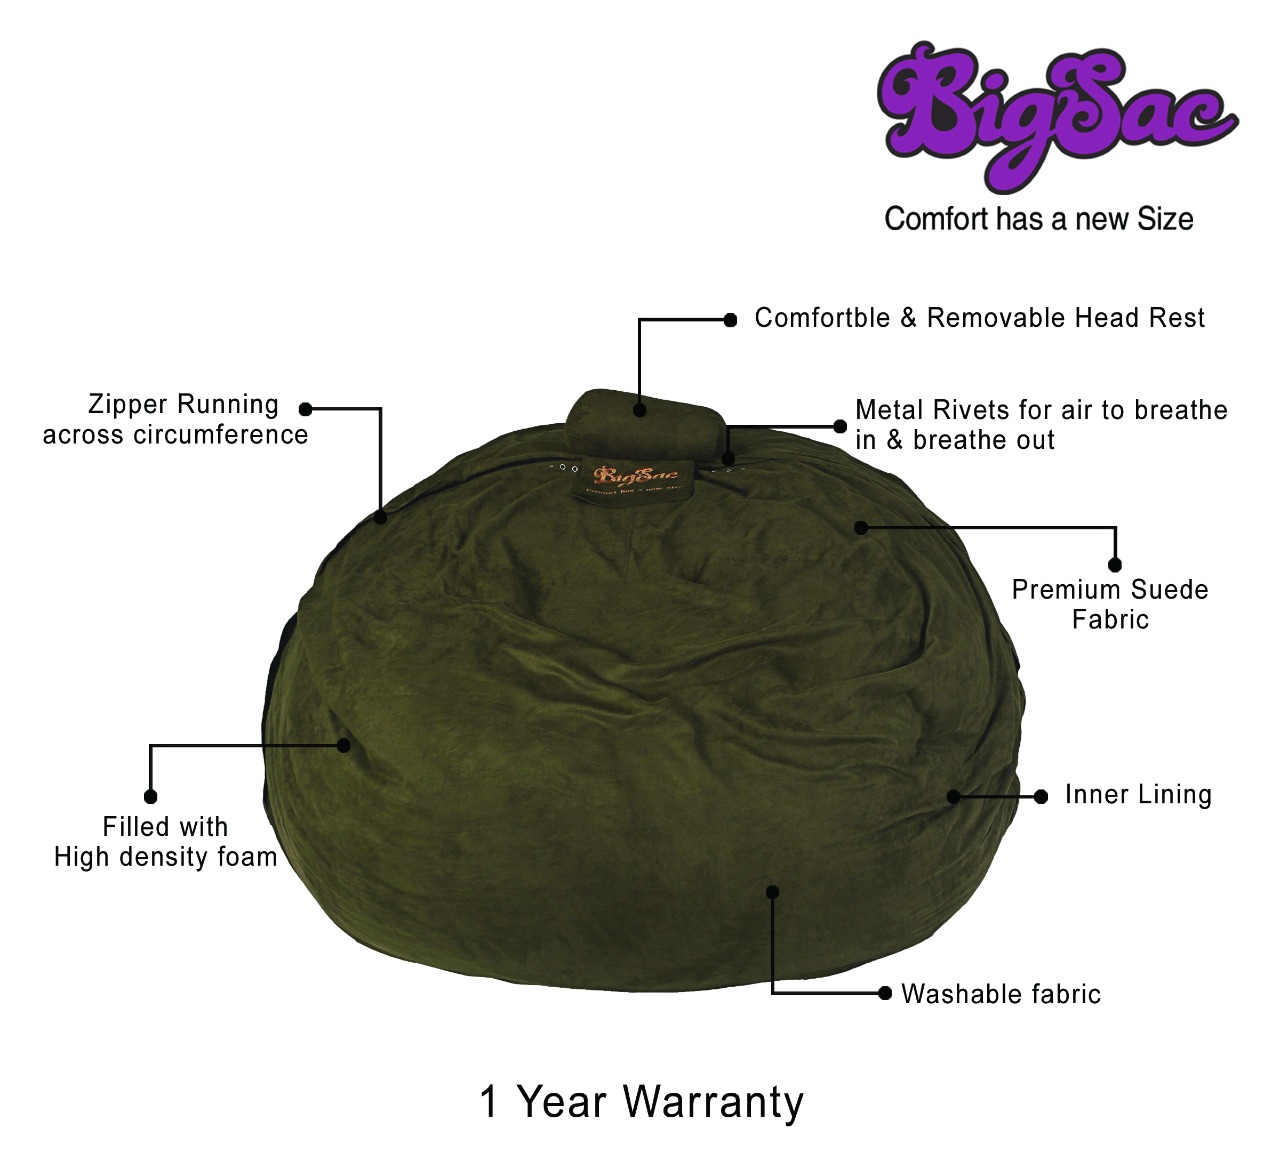 Big Sac 4.5 Feet Movie Sac Premium Suede Fabric Filled Green Color - 5 Years Warranty      